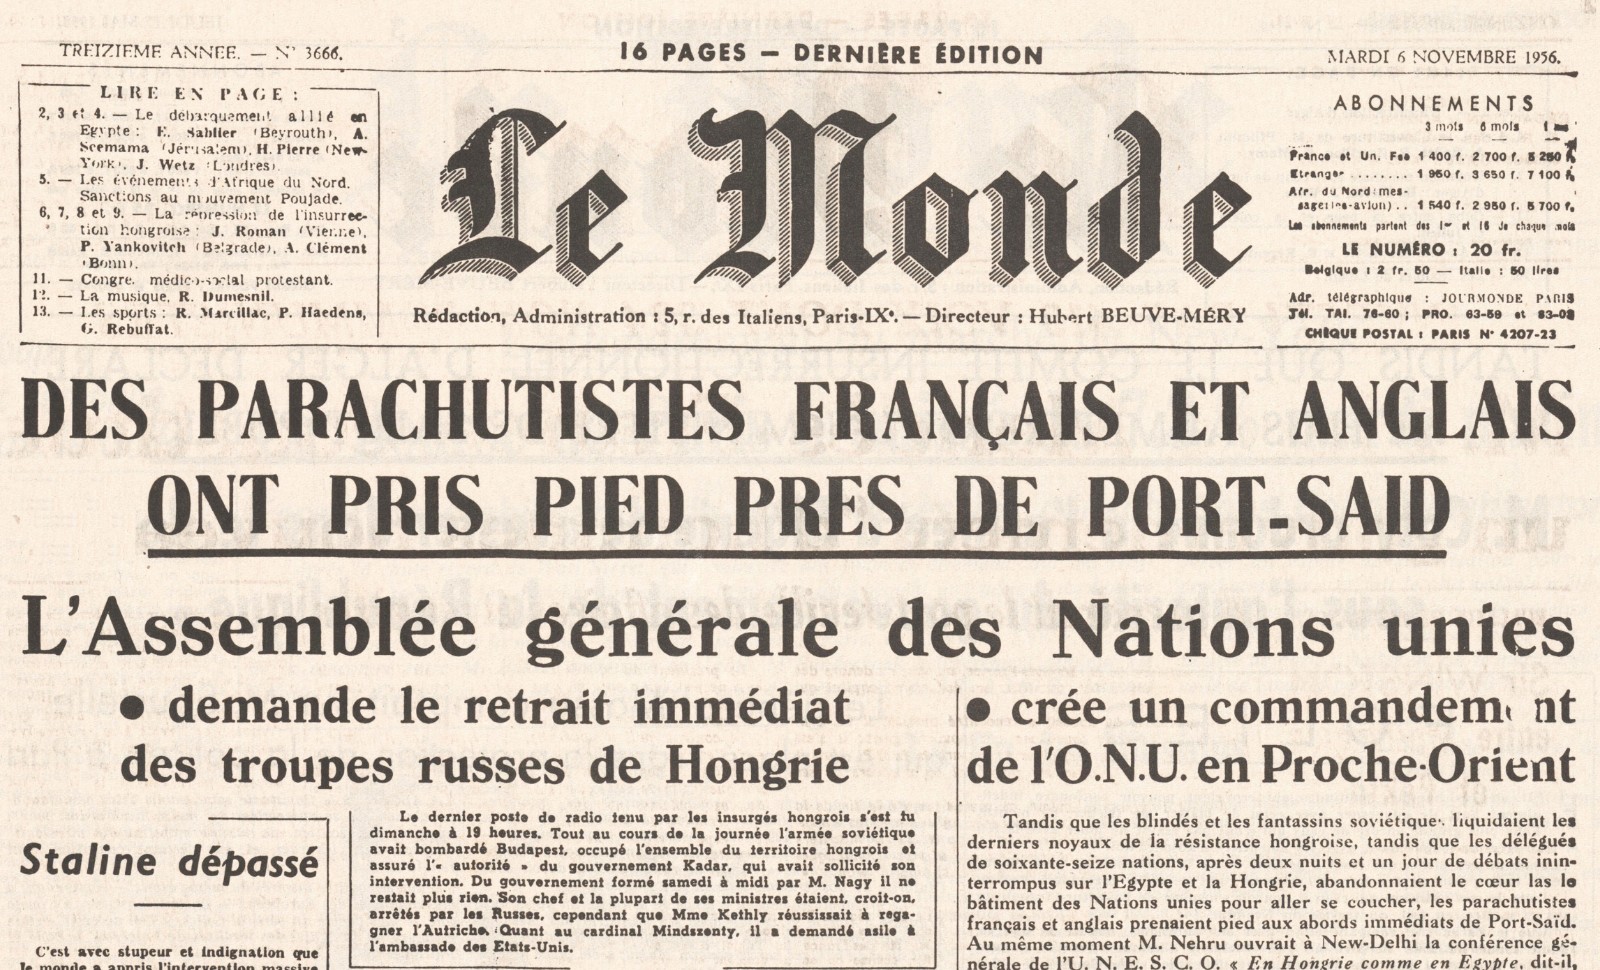 Article du "Monde" 6 novembre 1956
© Mary EVANS/ SIPA